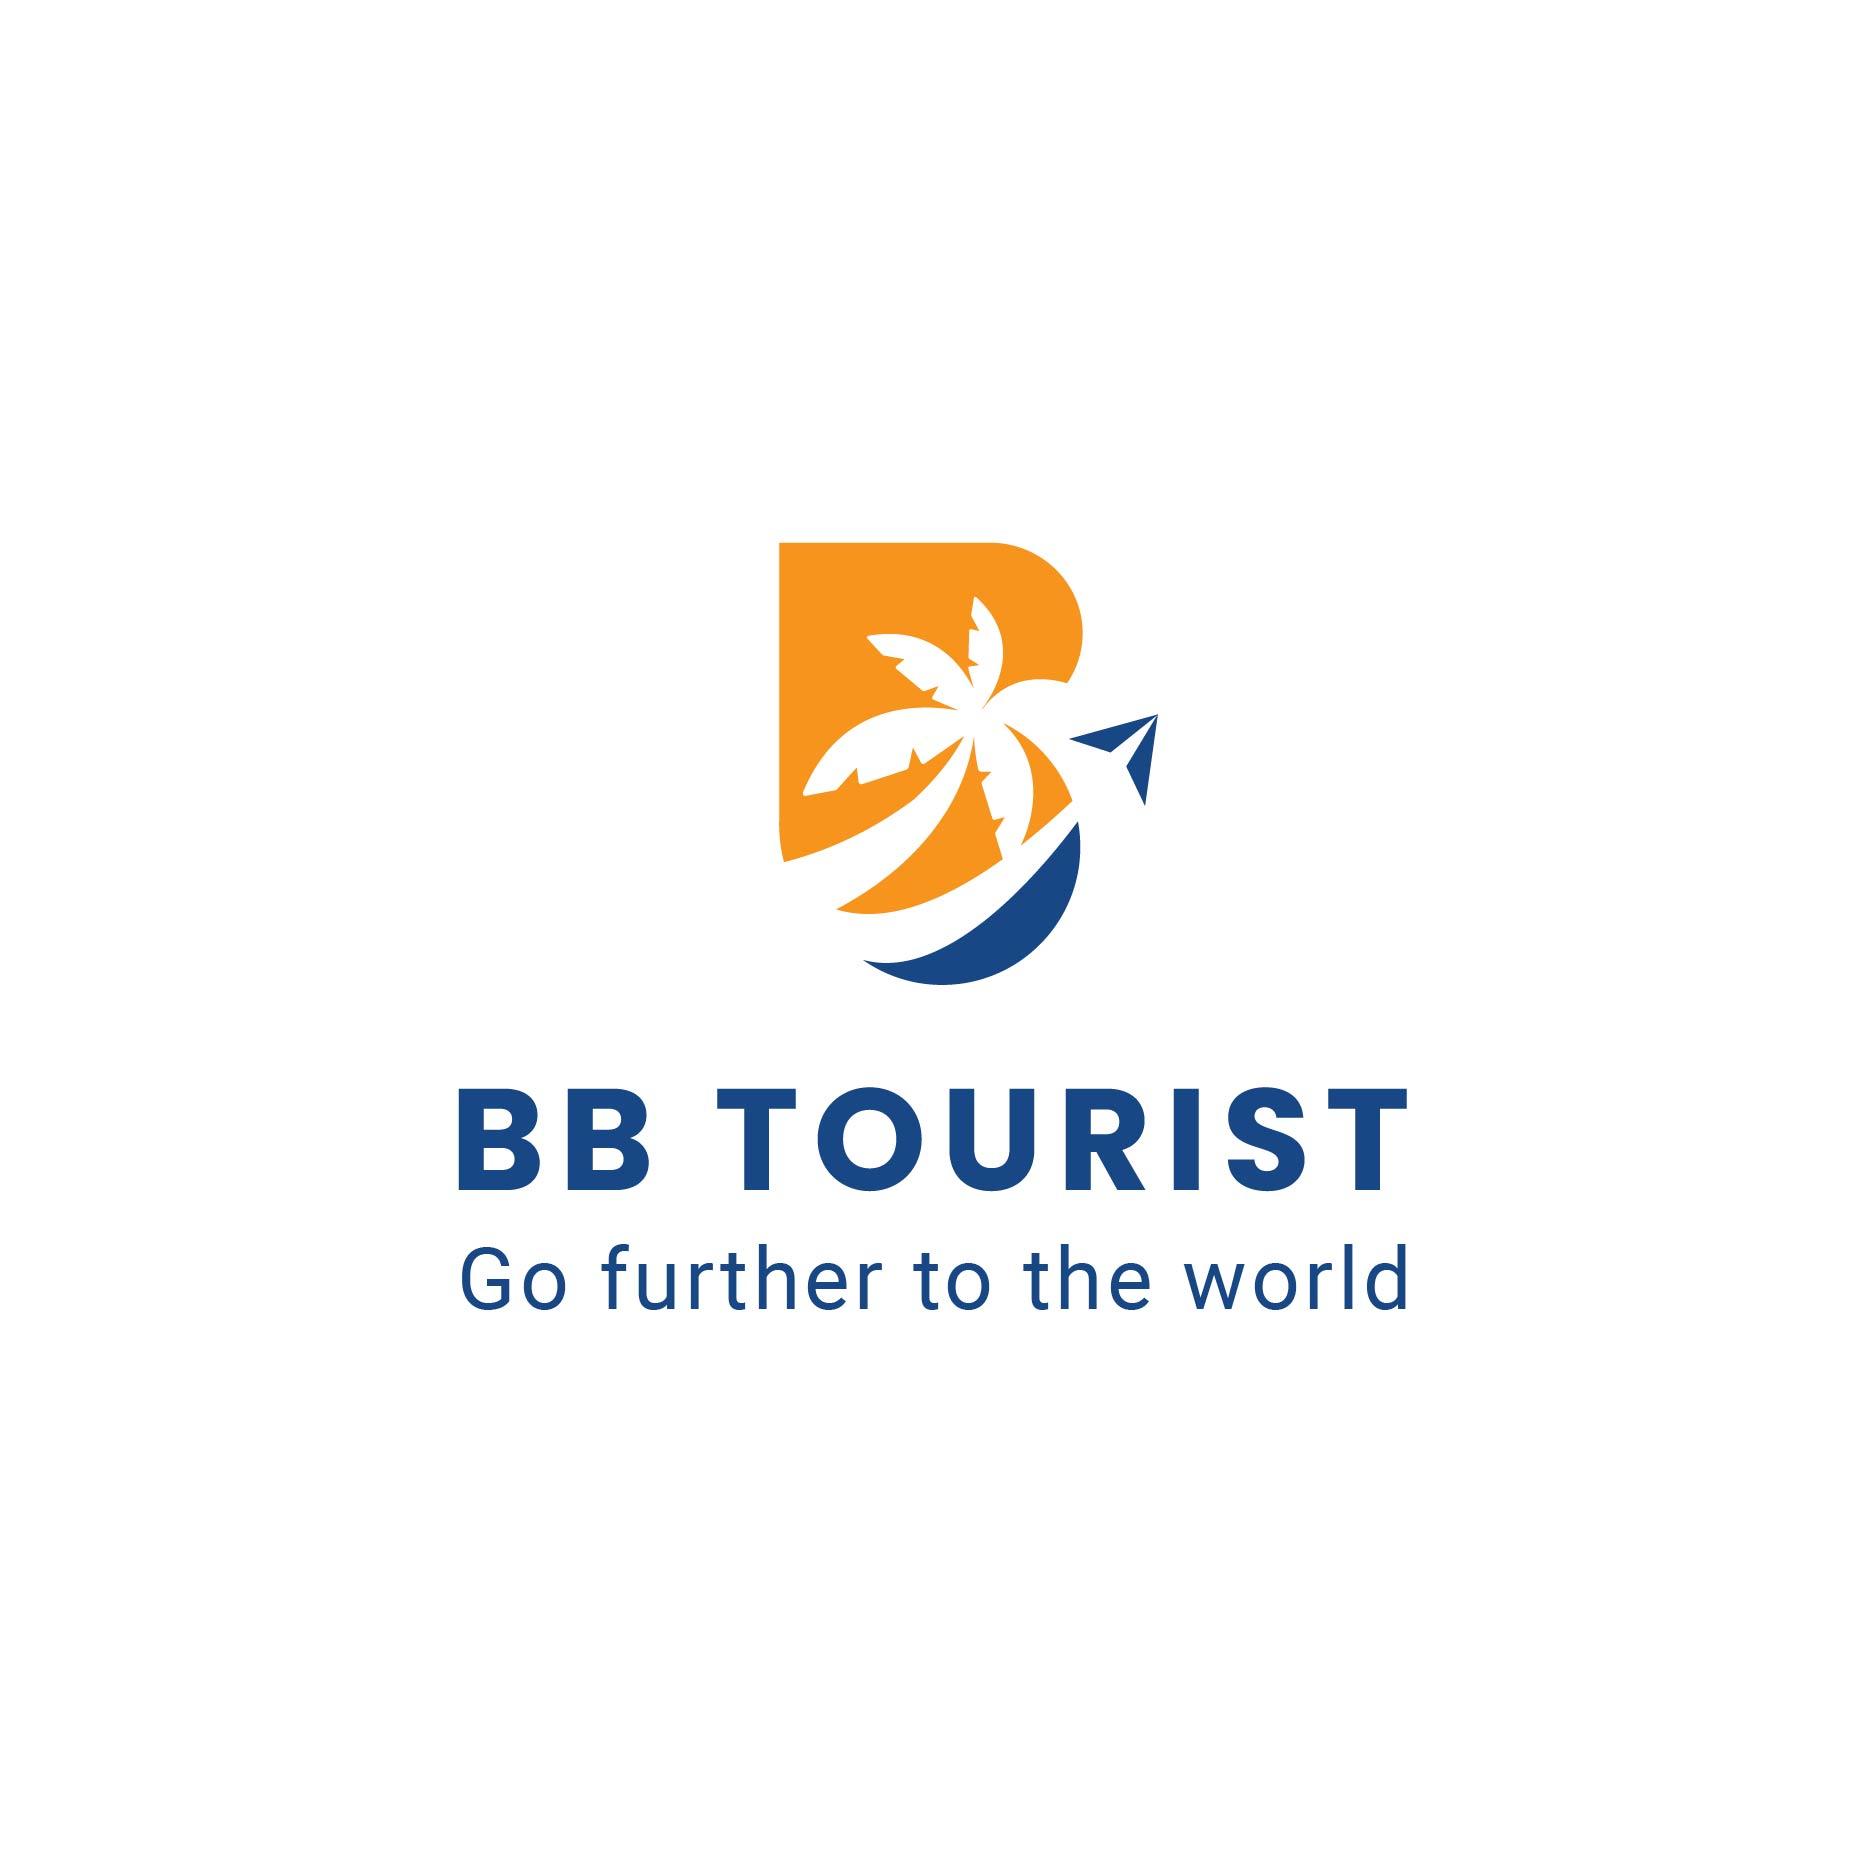 BB TOURIST